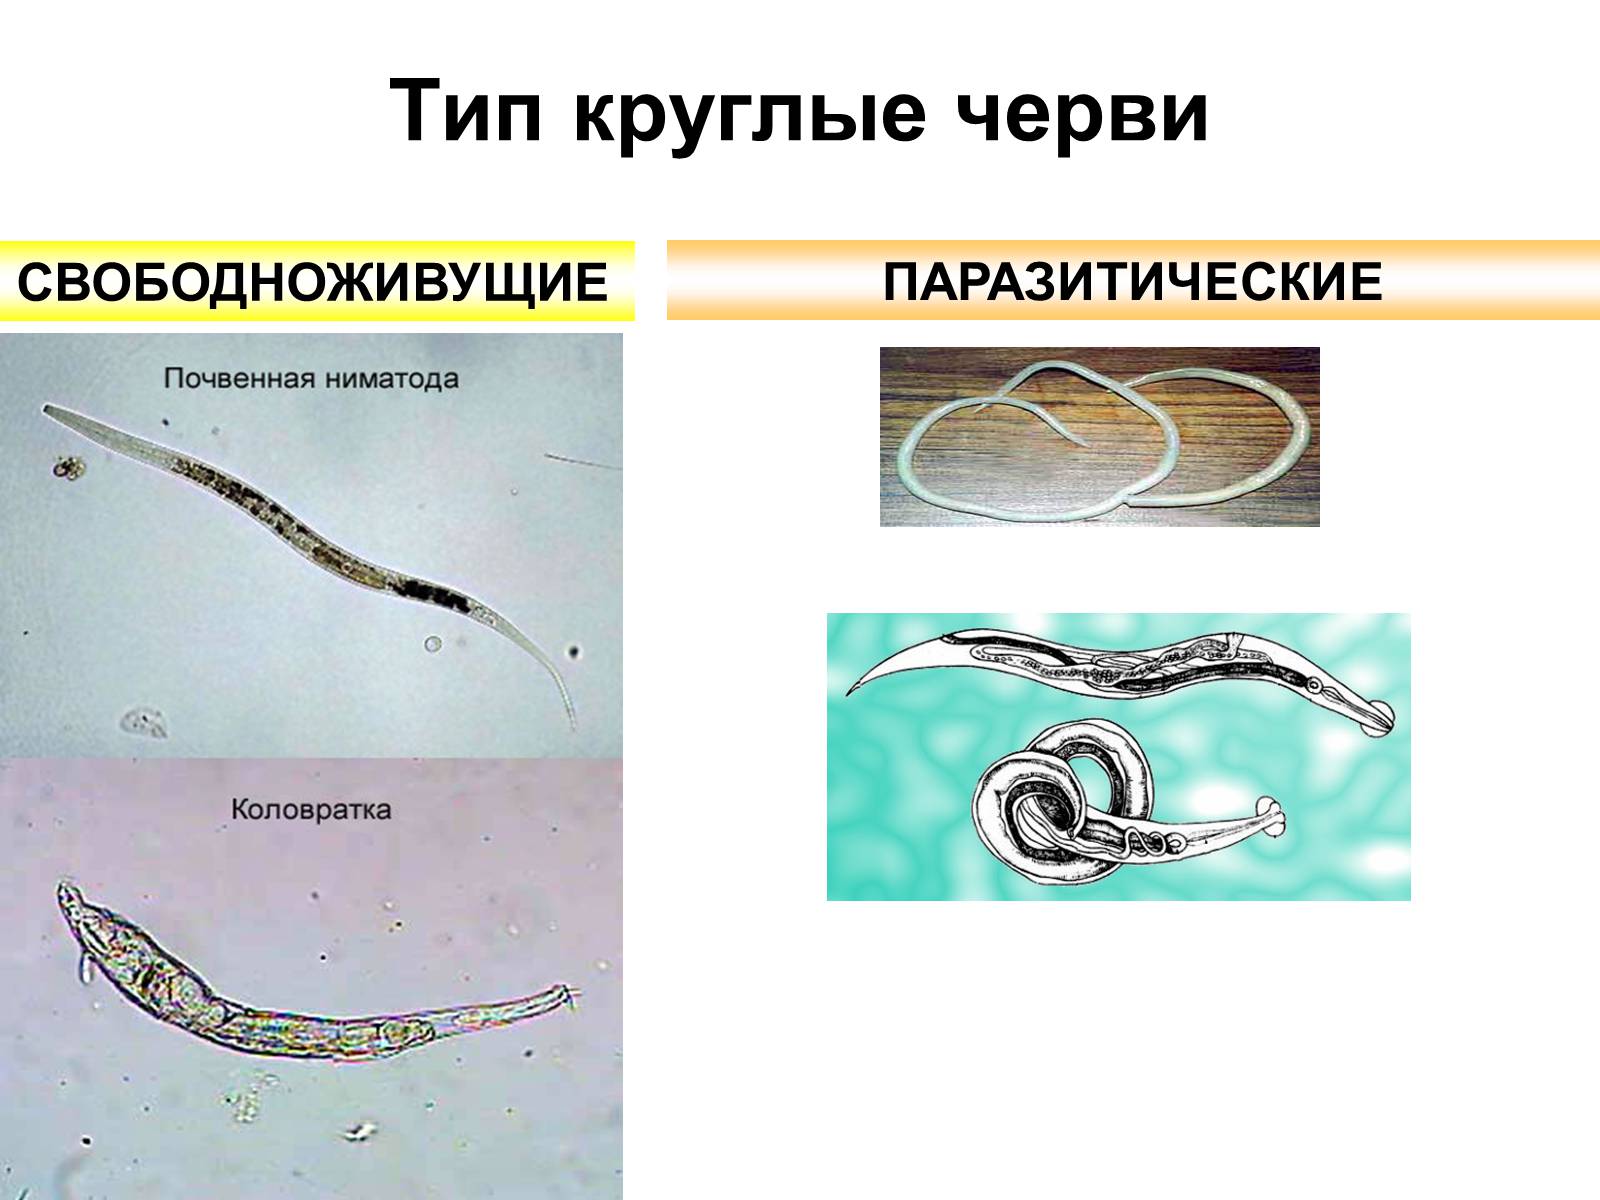 Дайте характеристику круглые черви. Паразитические черви Тип круглые черви. Свободоживущие и паразитические червей. Свободноживущие нематоды черви. Круглые черви паразиты представители.